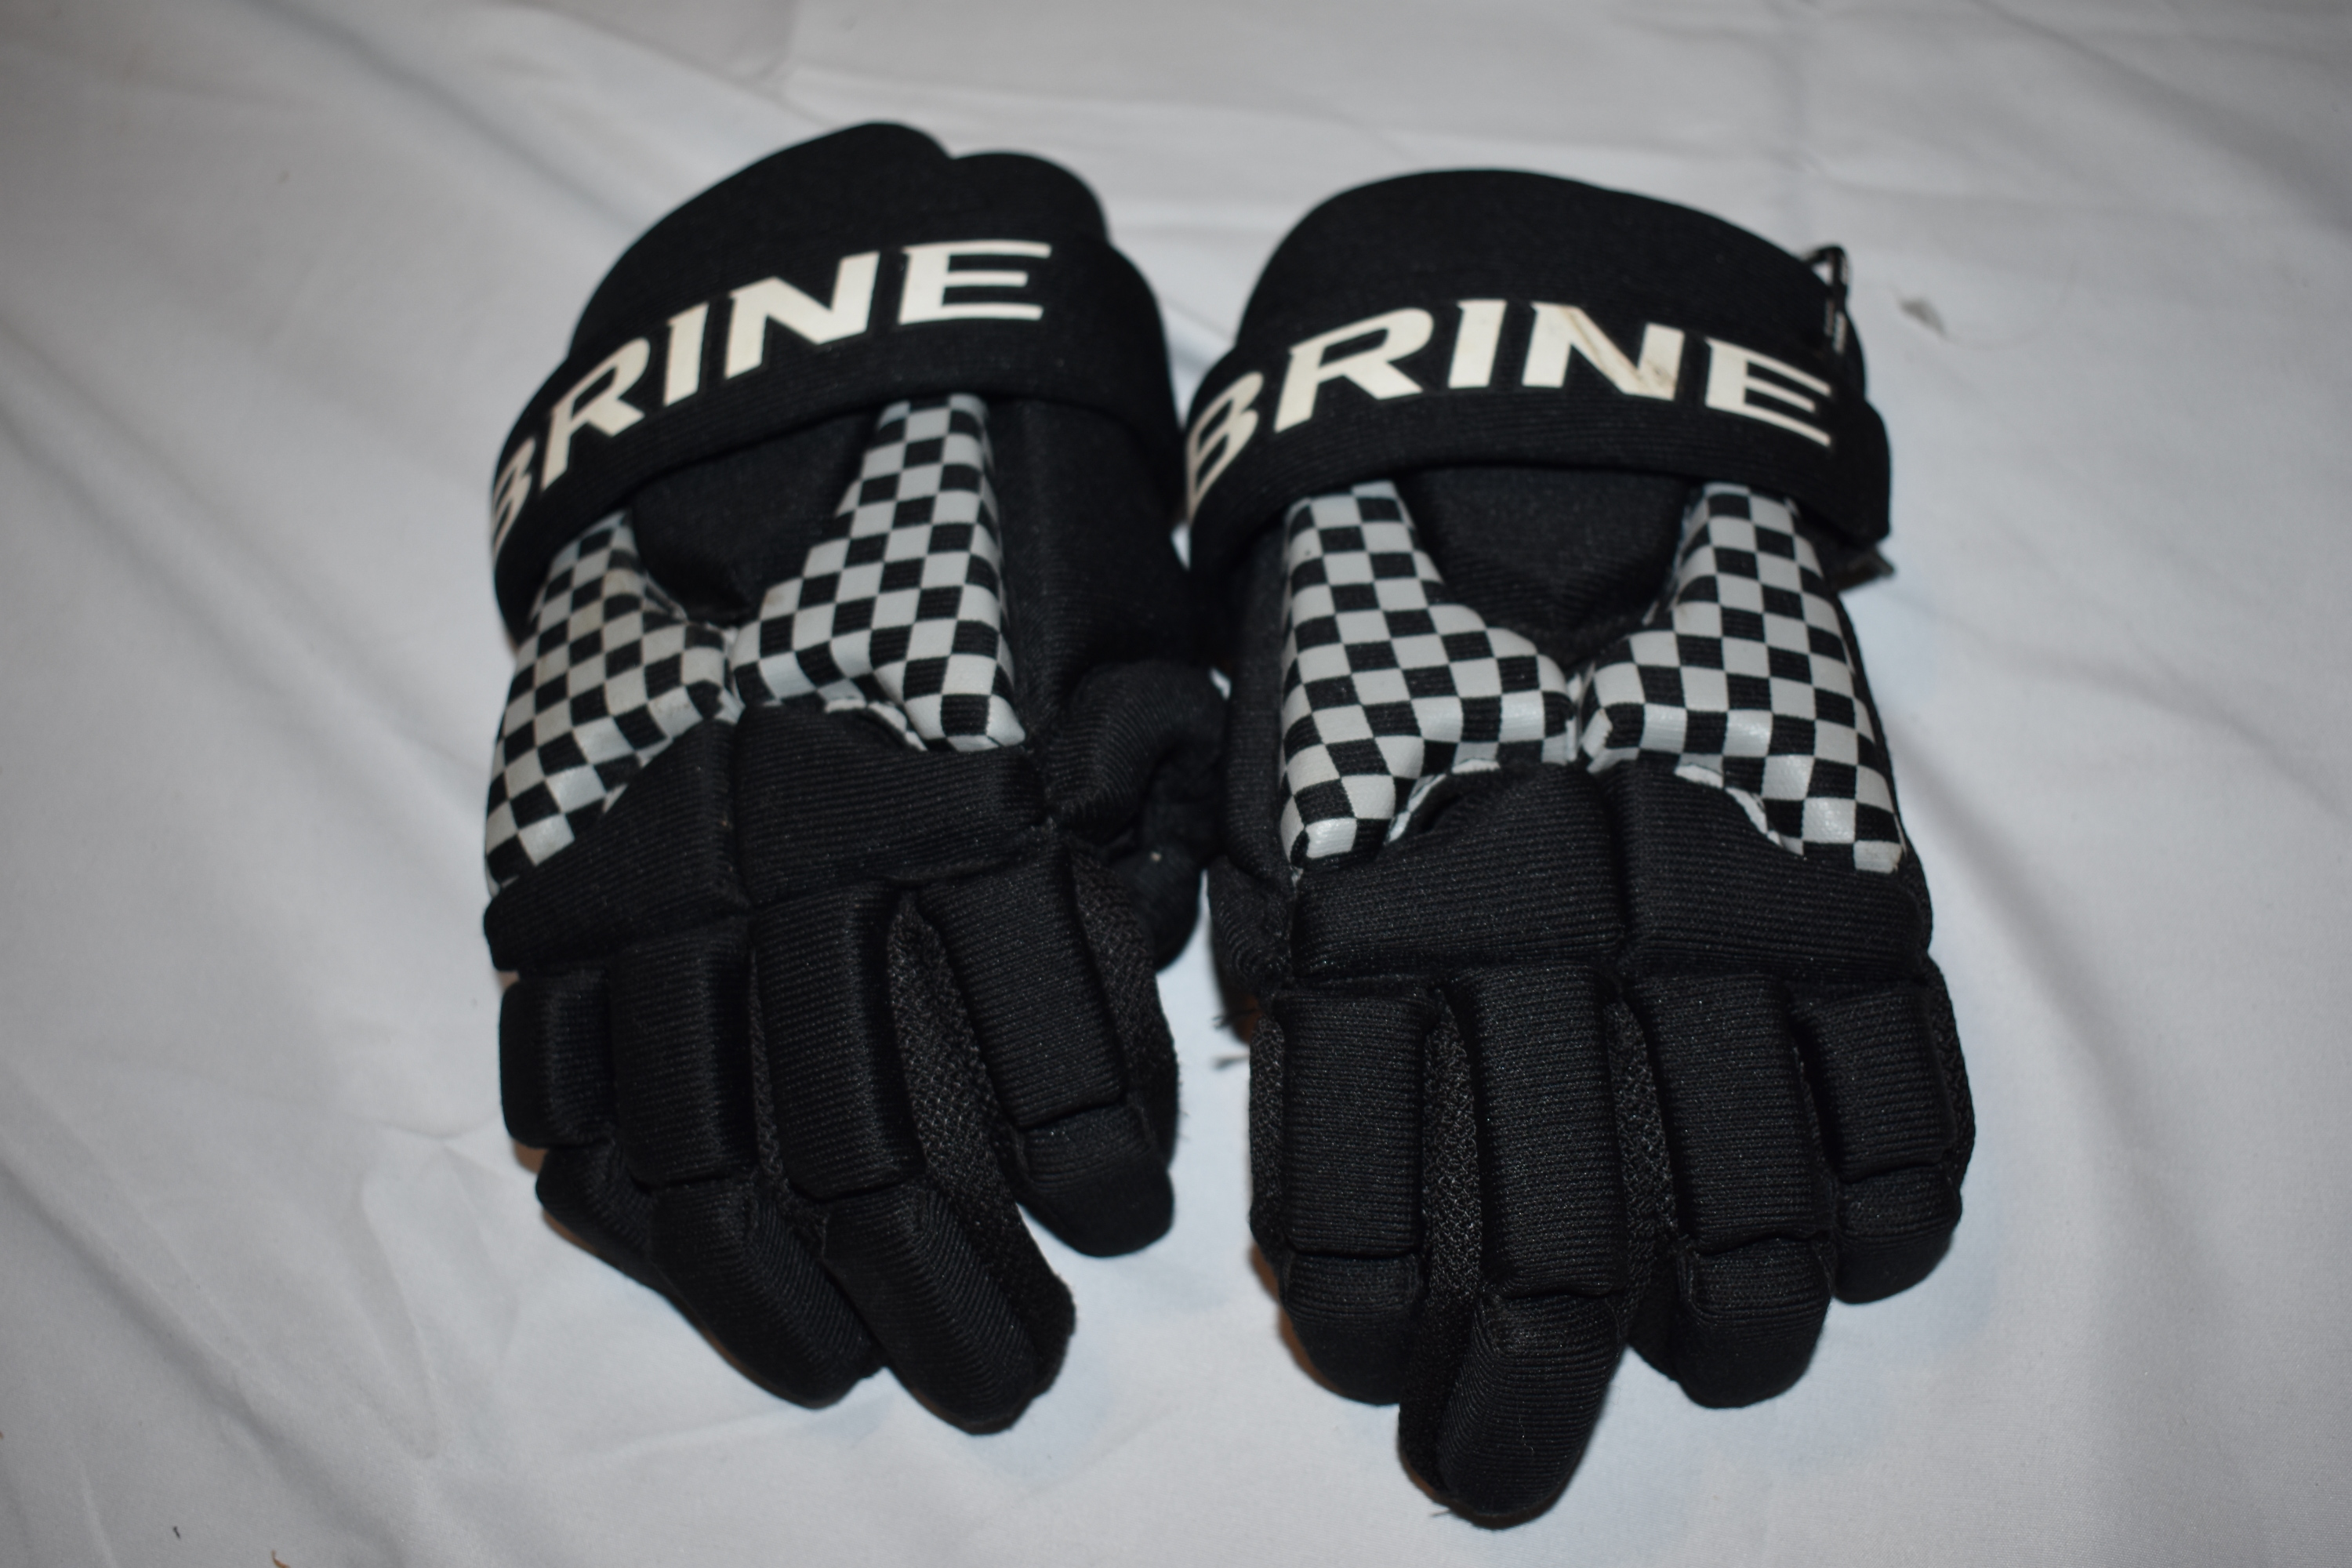 Brine Lacrosse Player Gloves, Black/White, 12 Inches